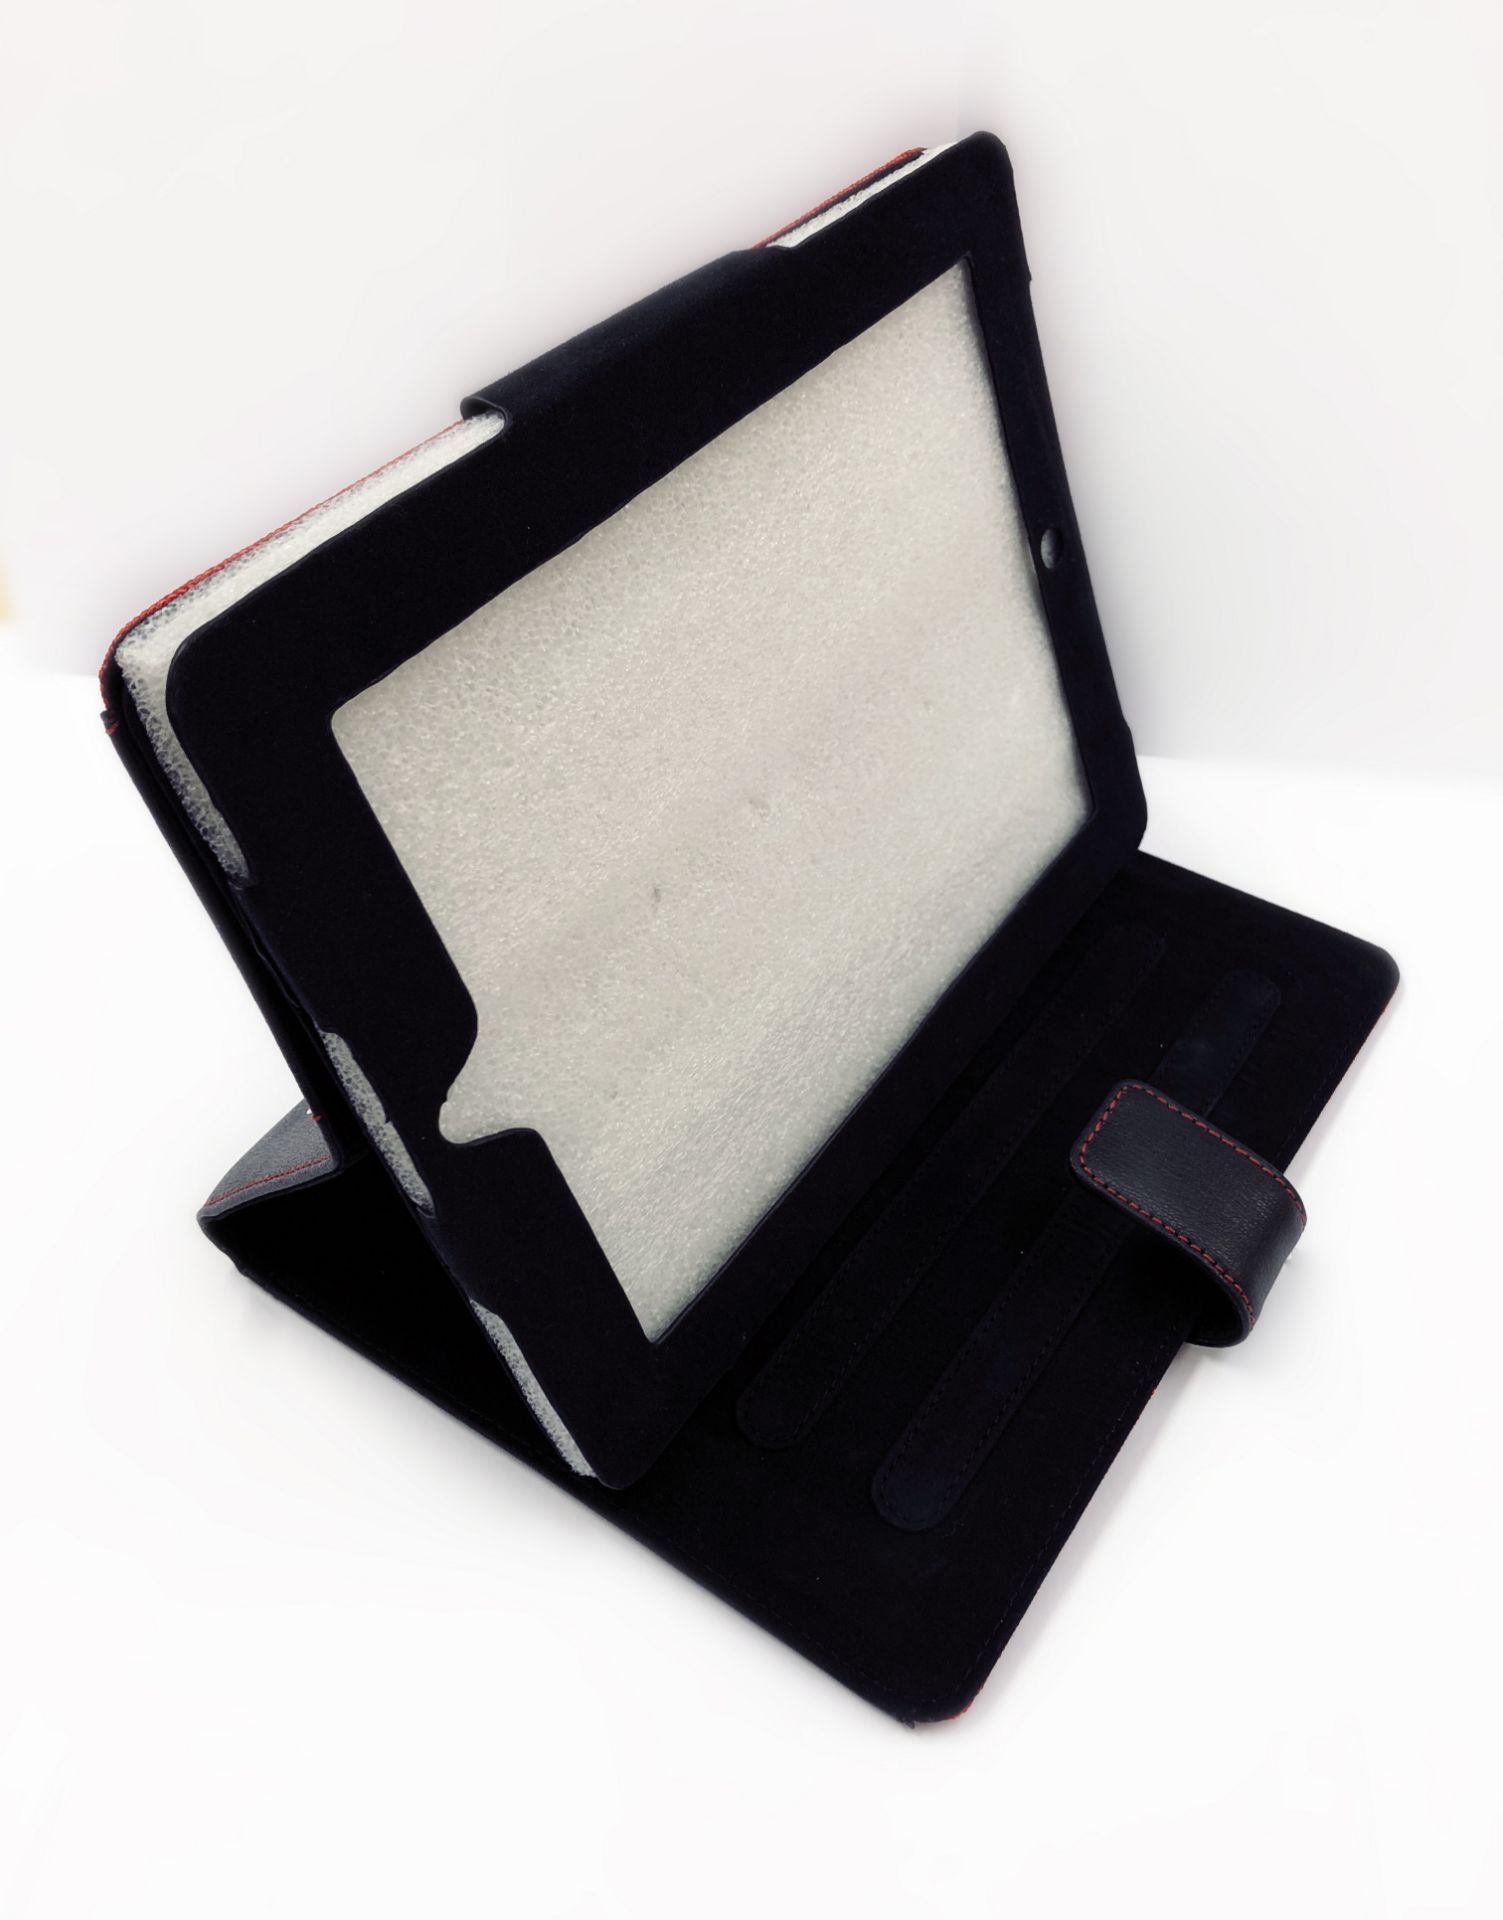 V Brand New Samsonite Black Leather & Red Canvas Ipad Mini Case - Image 2 of 3